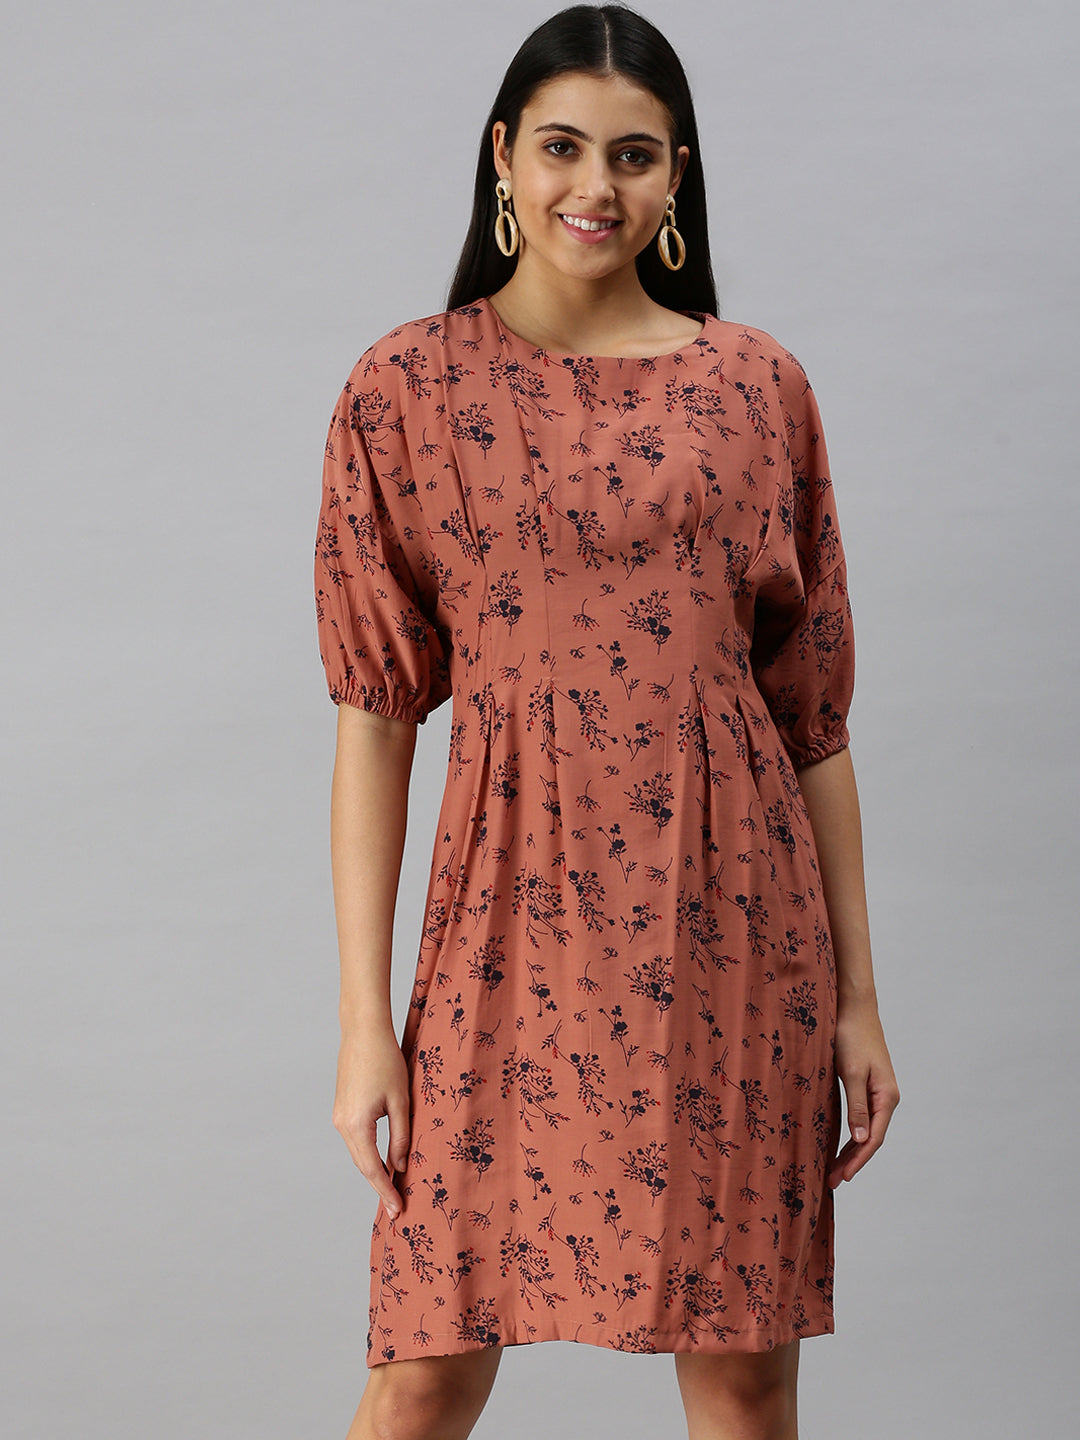 Women's A-Line Brown Printed Dress